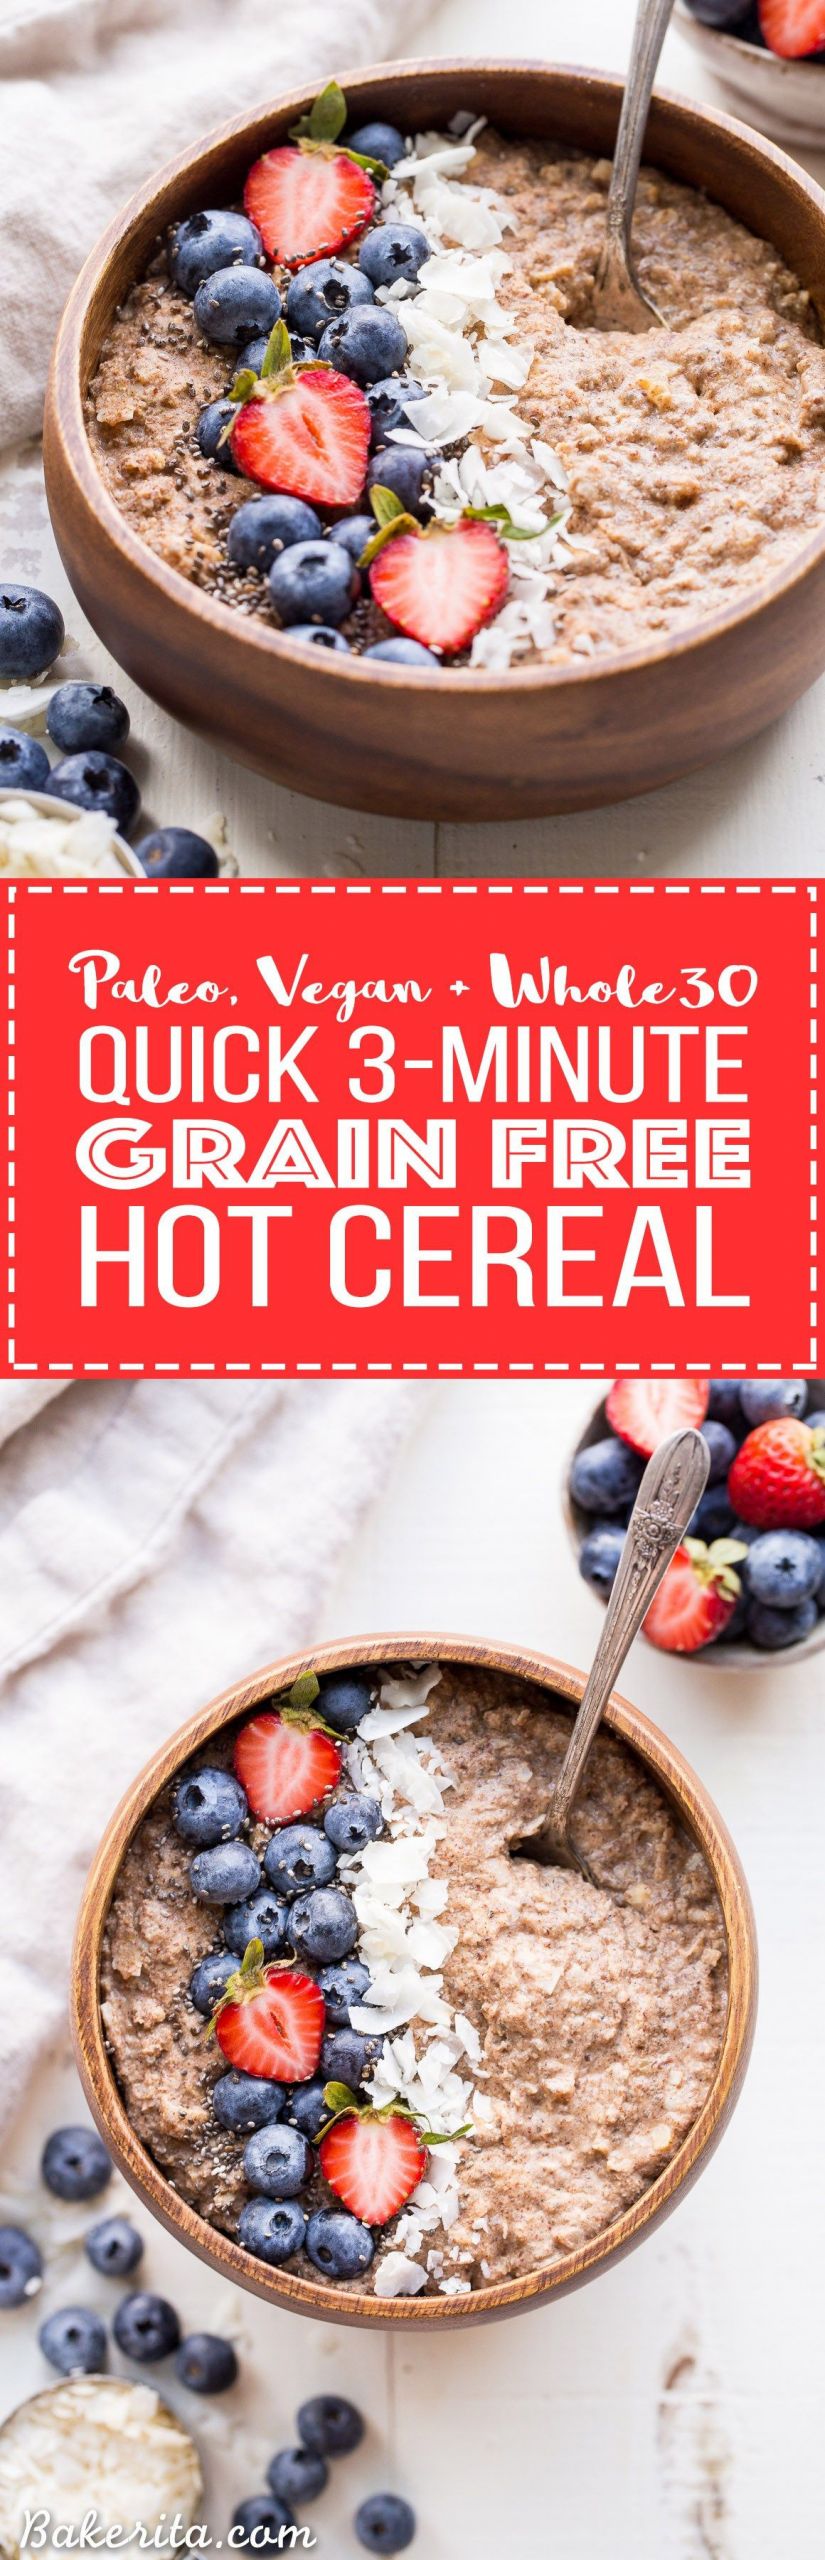 Grain Free Breakfast Recipes
 Quick Grain Free Hot Cereal Gluten Free Paleo Whole30